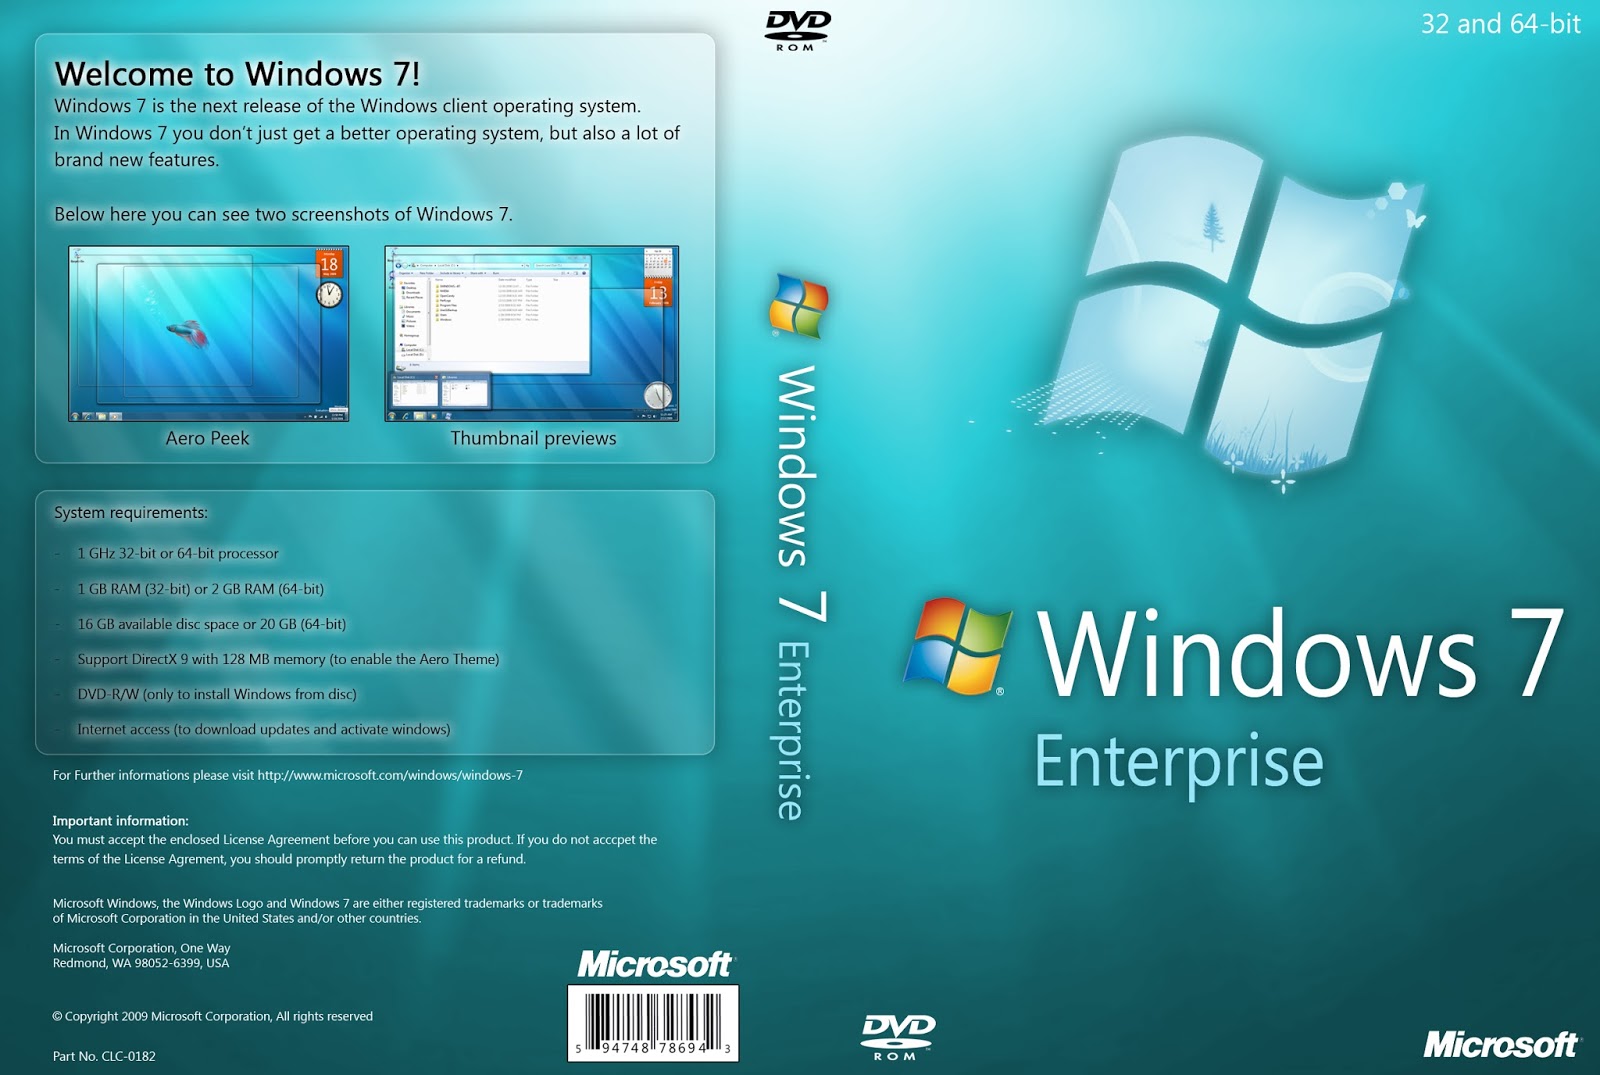 microsoft dvd software windows 7